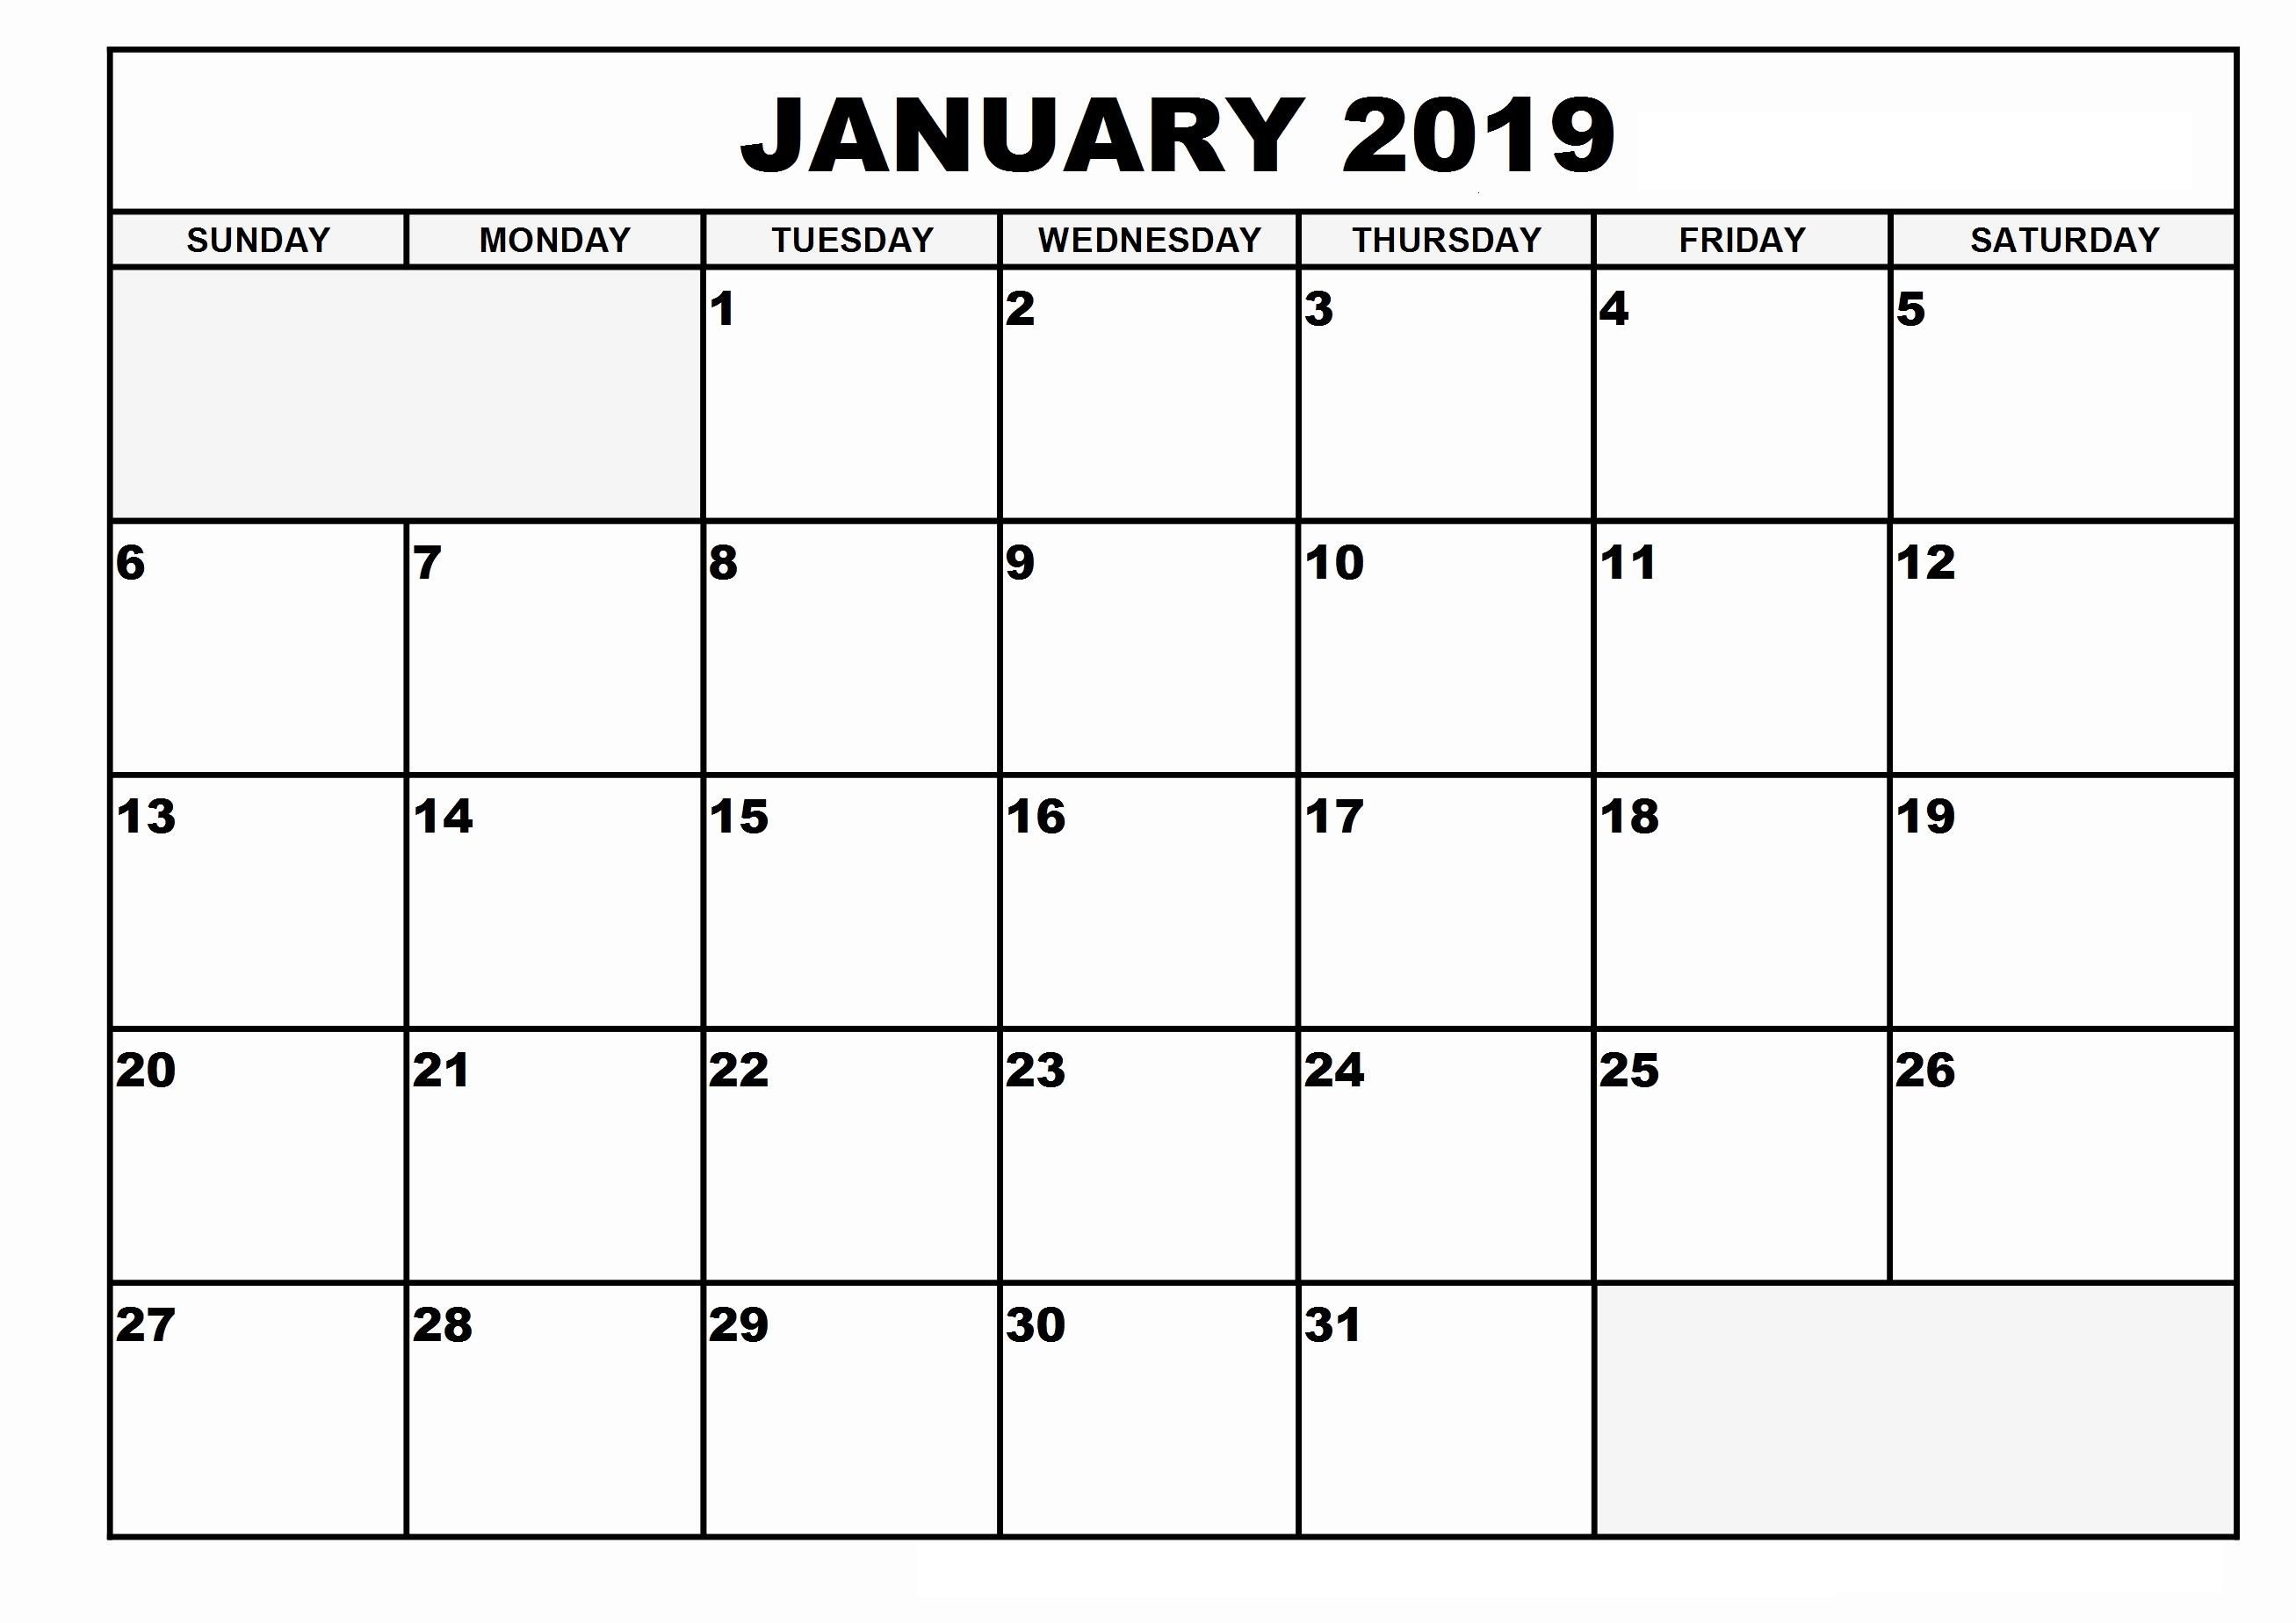 January 2019 Calendar Template Dates Printable #january2019